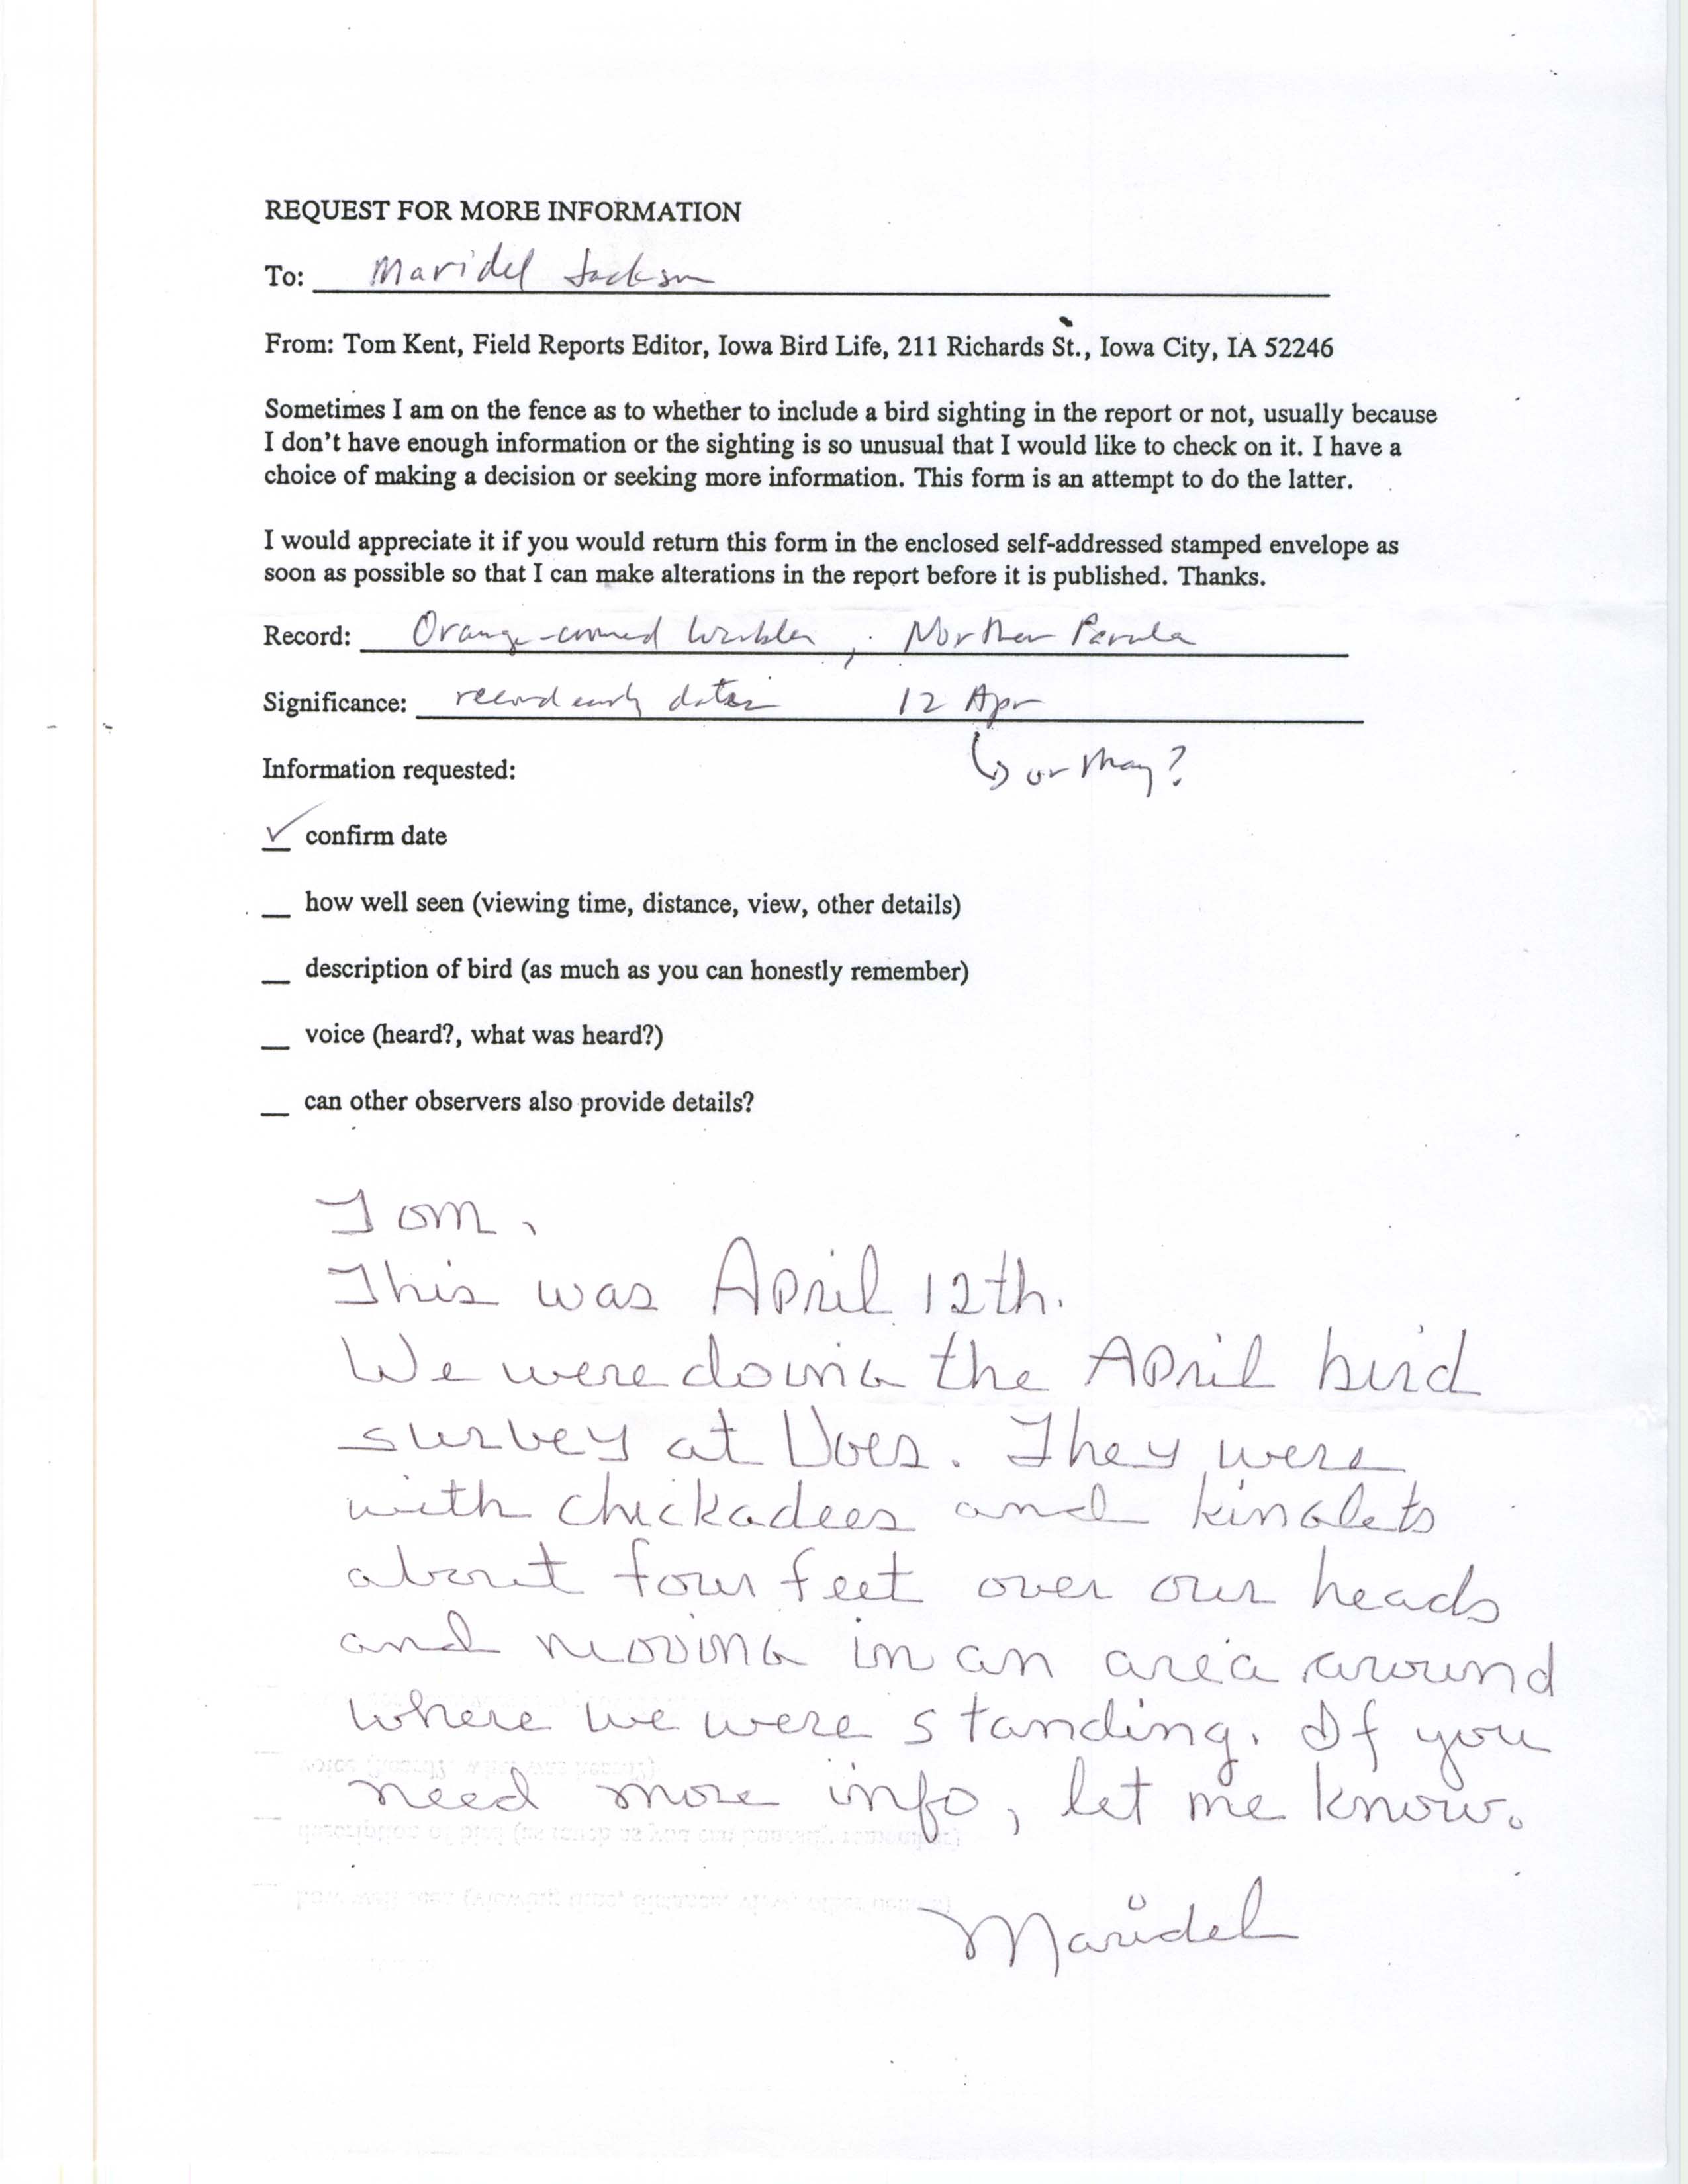 Thomas Kent letter to Maridel Jackson regarding request for more information, spring 1998